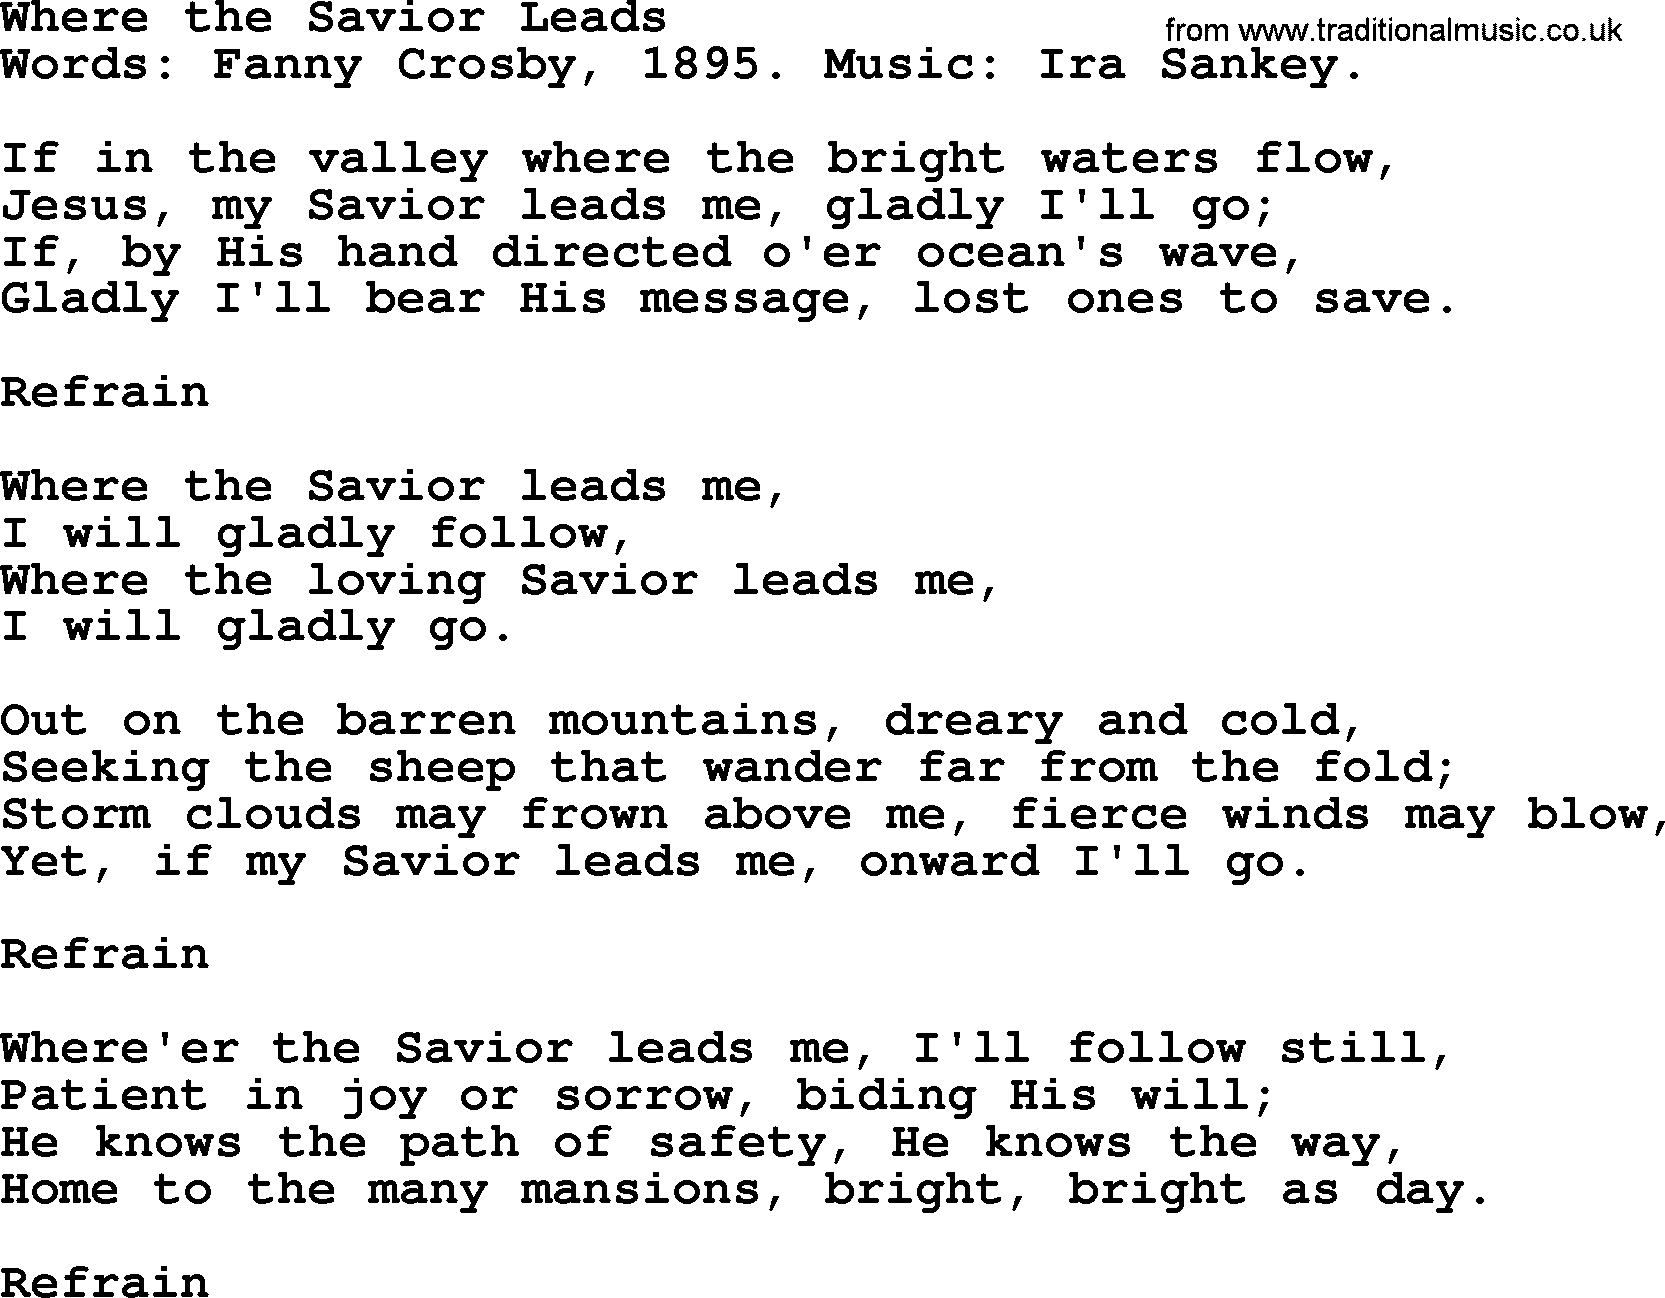 Fanny Crosby song: Where The Savior Leads, lyrics